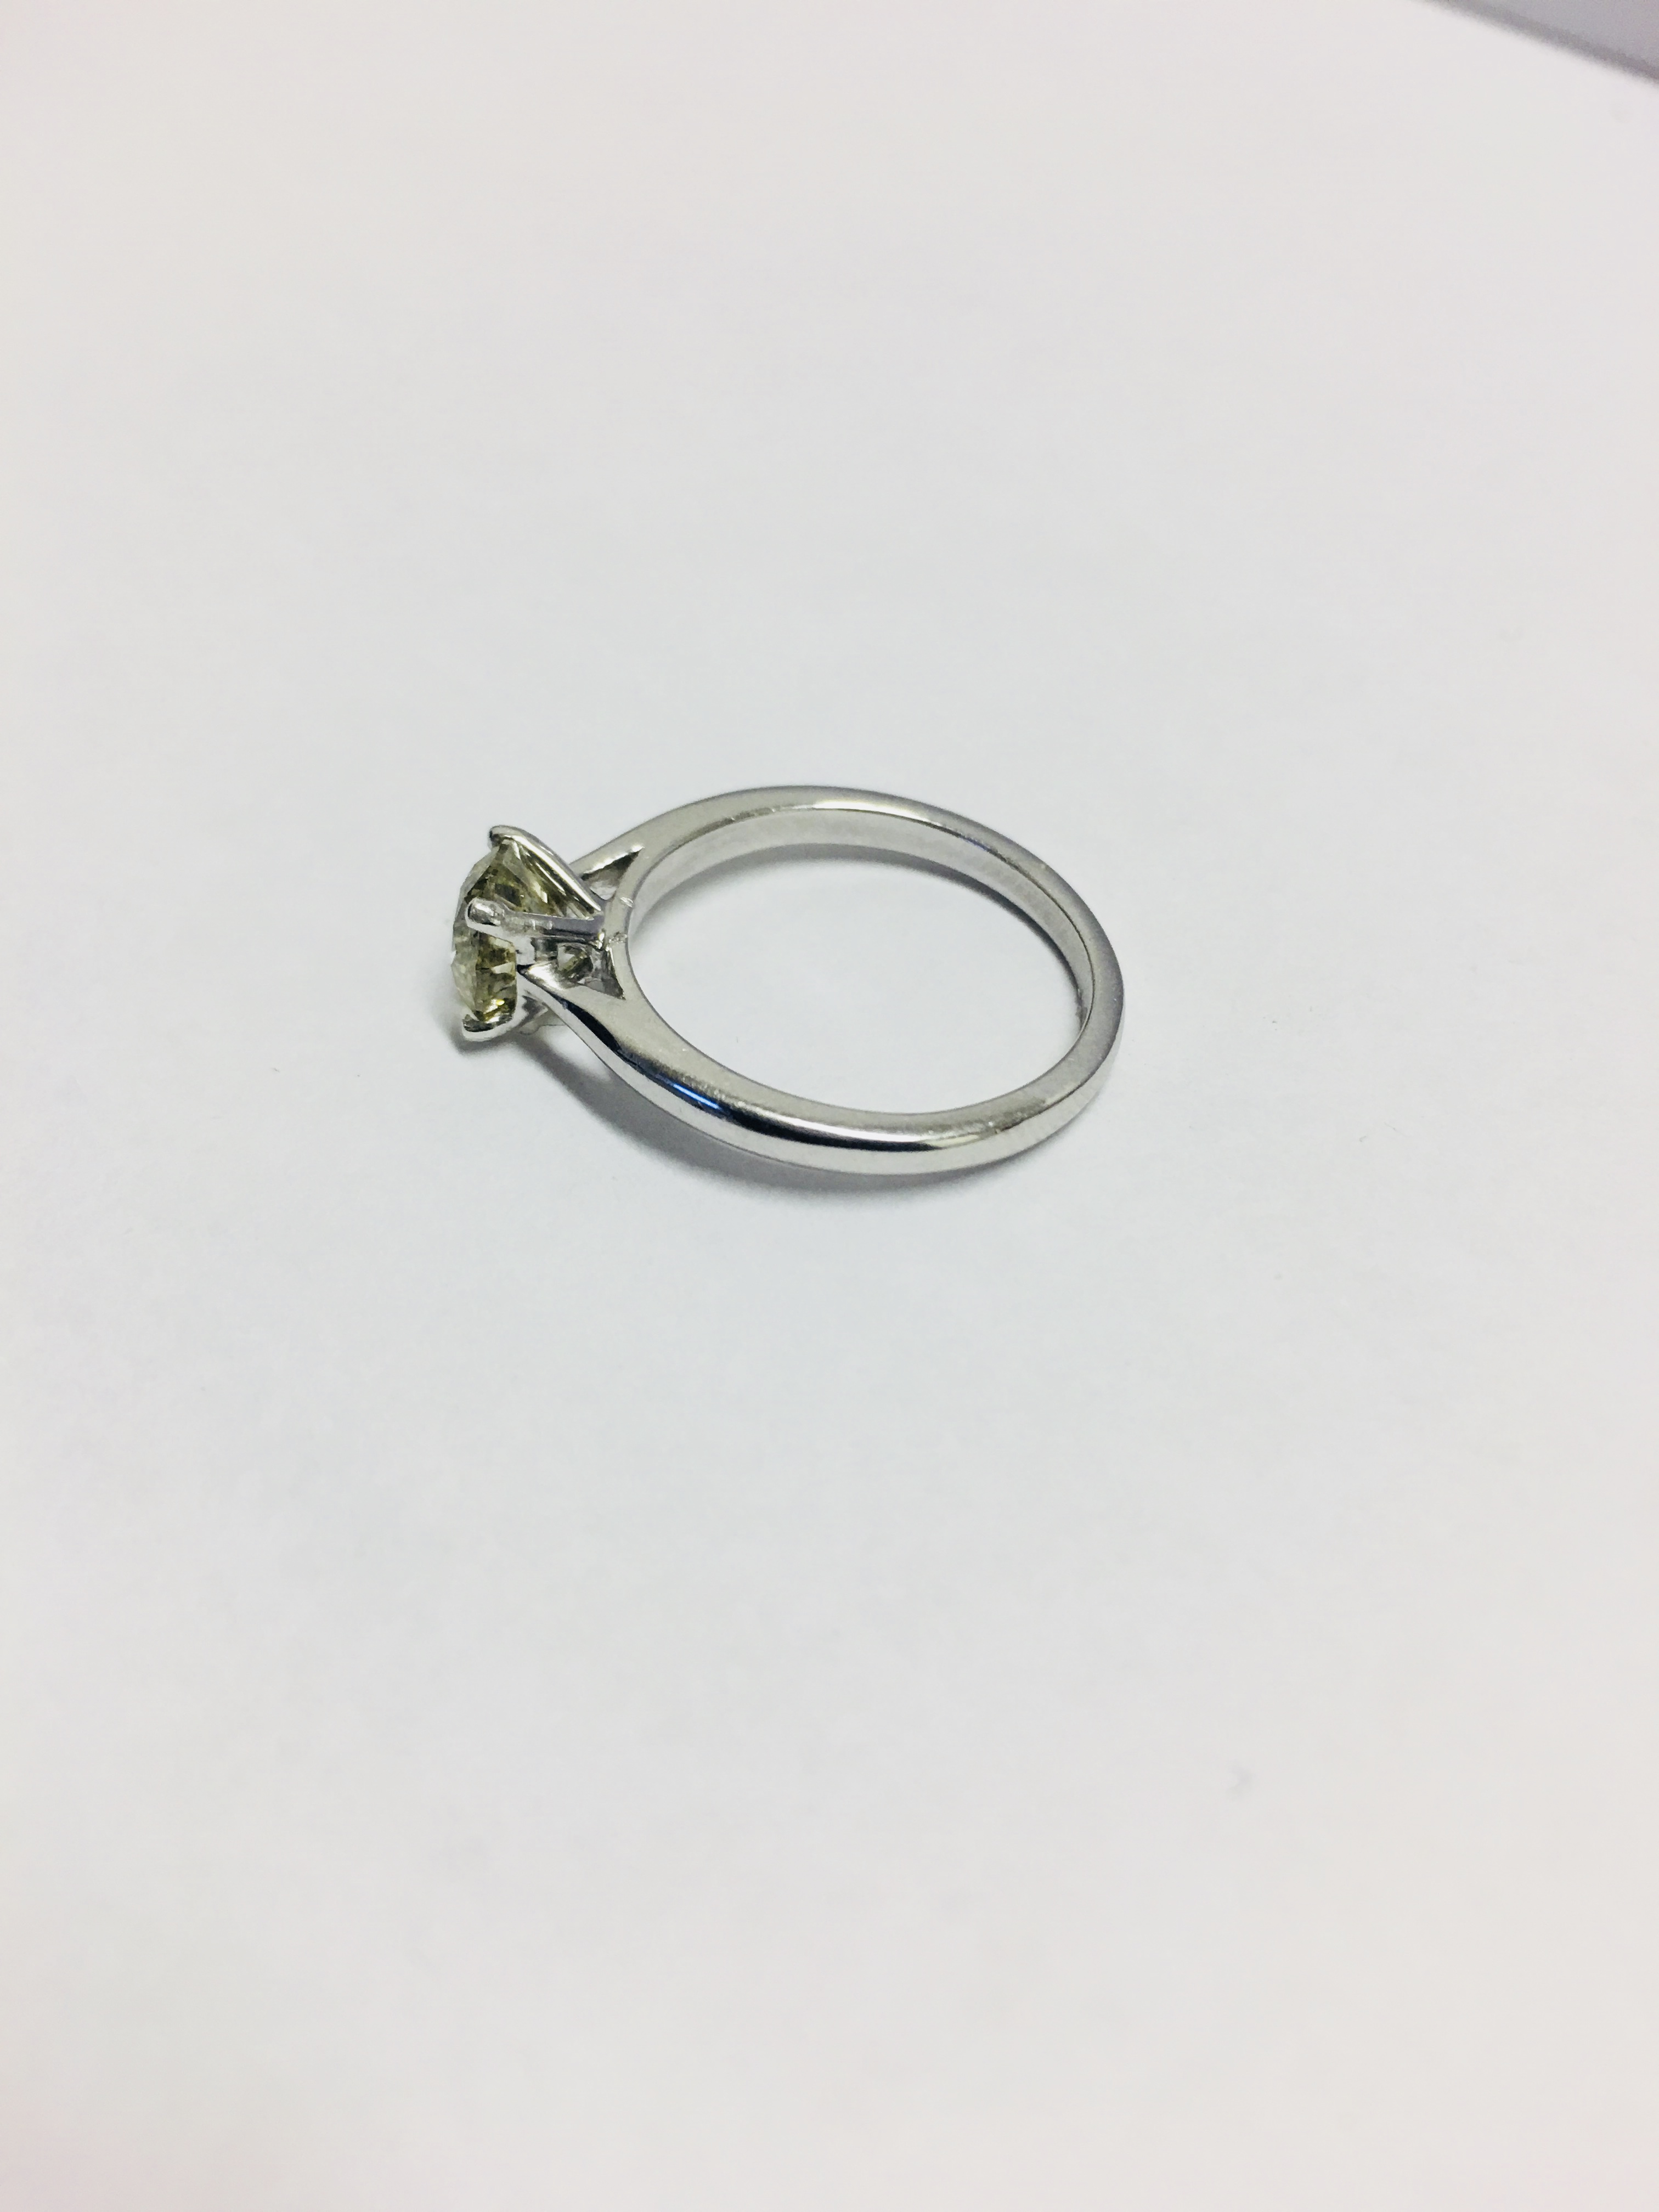 1Ct Brilliant Cut Diamond Solitaire Ring, - Image 3 of 6